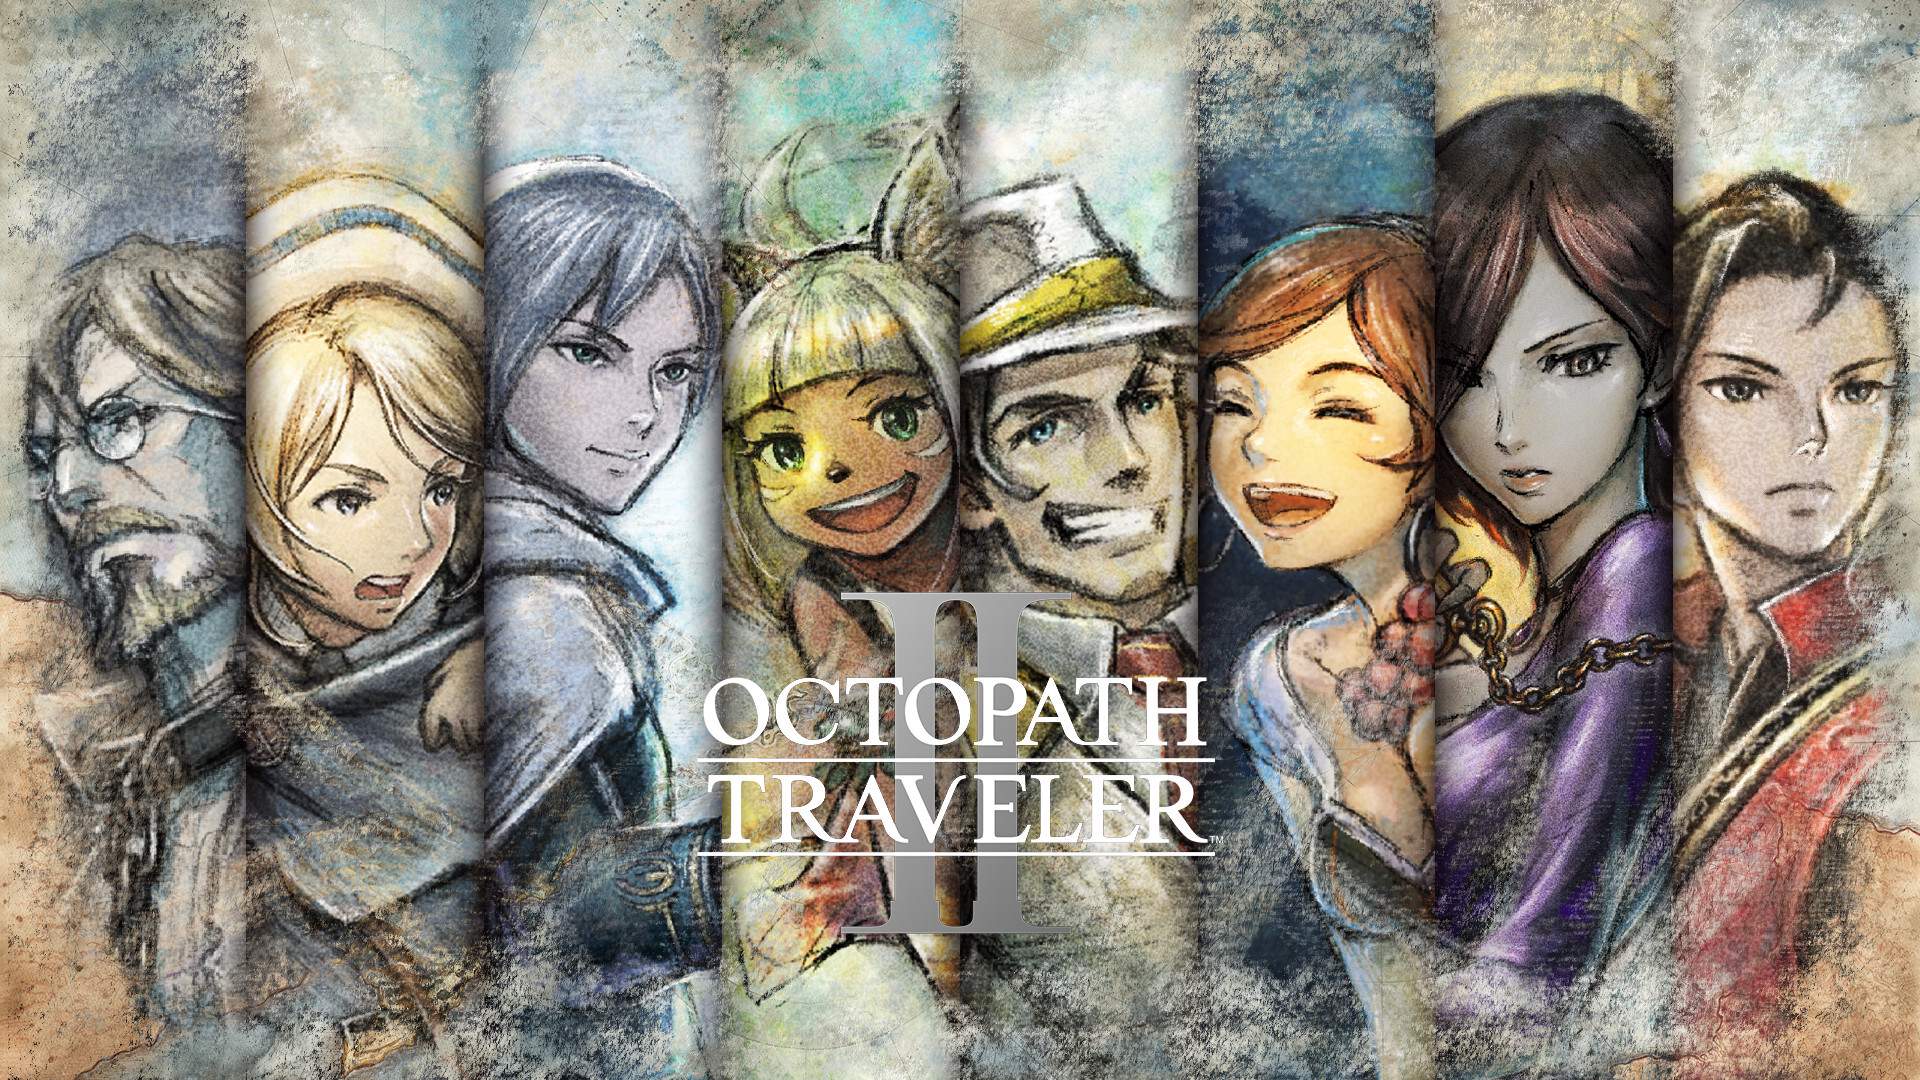 OCTOPATH TRAVELER II - Launch Trailer - Nintendo Switch 